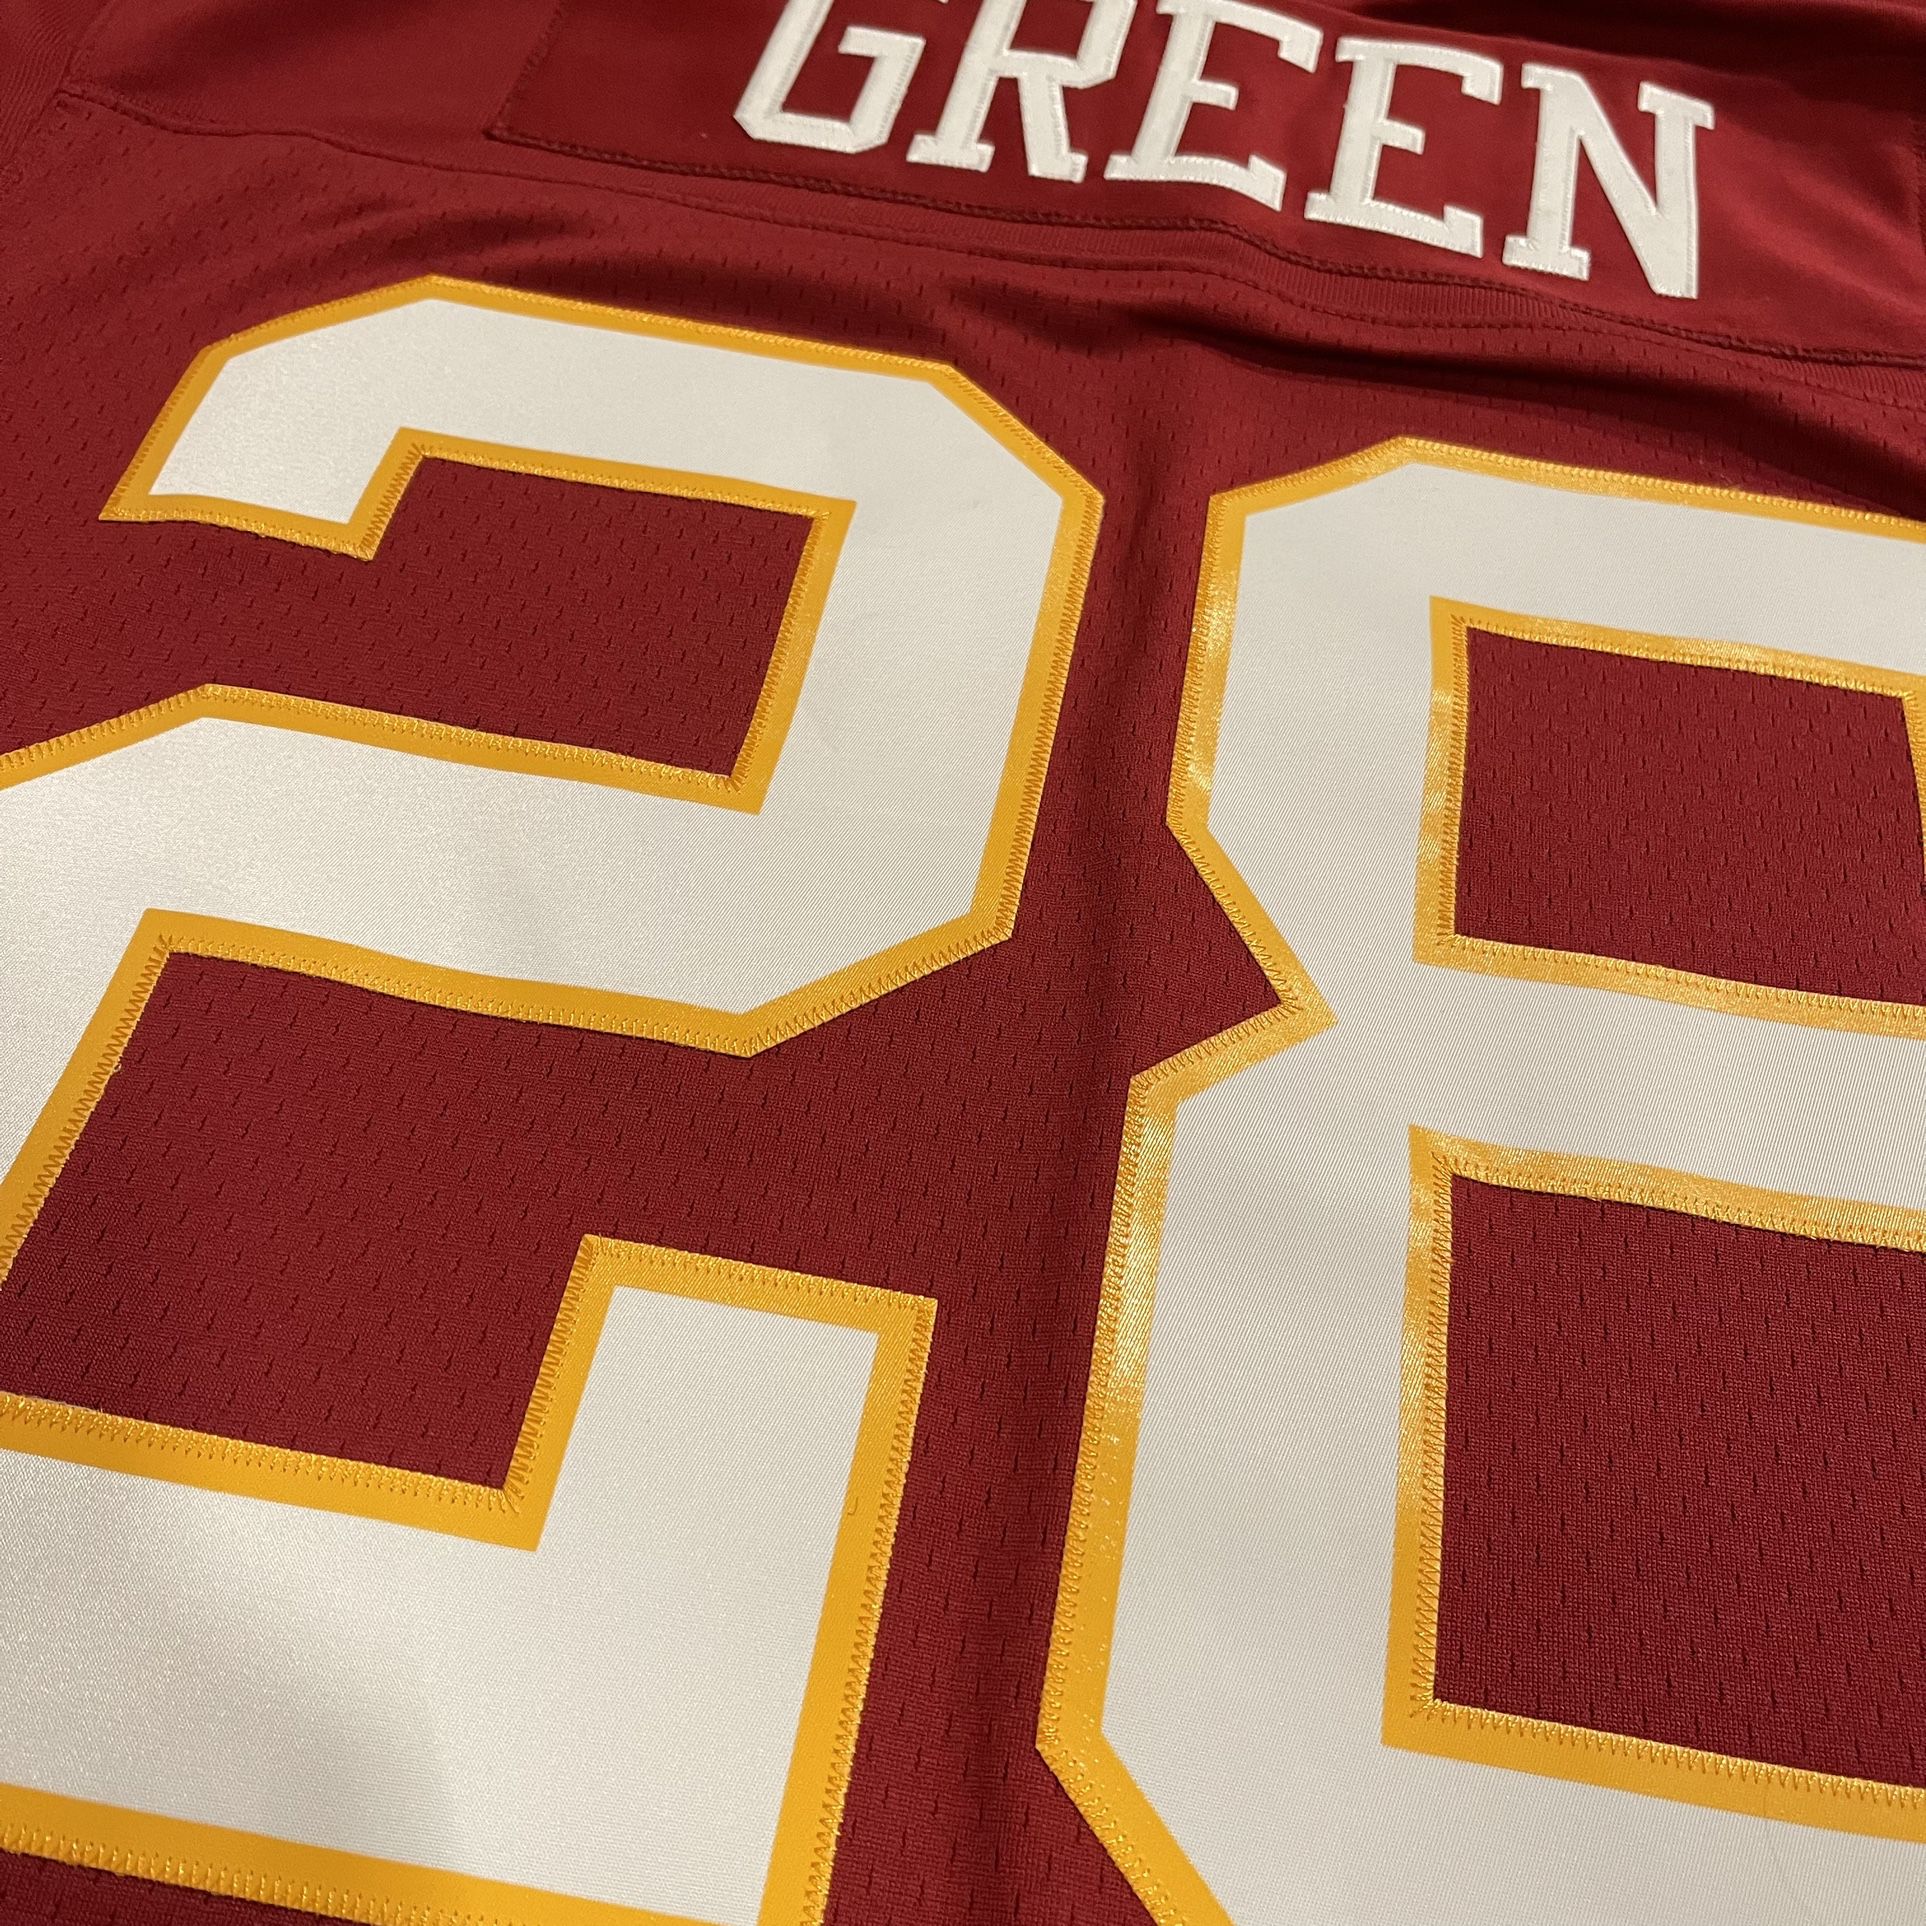 Mitchell & Ness | Washington Redskins Darrell Green Jersey | Size: Medium (NWT)